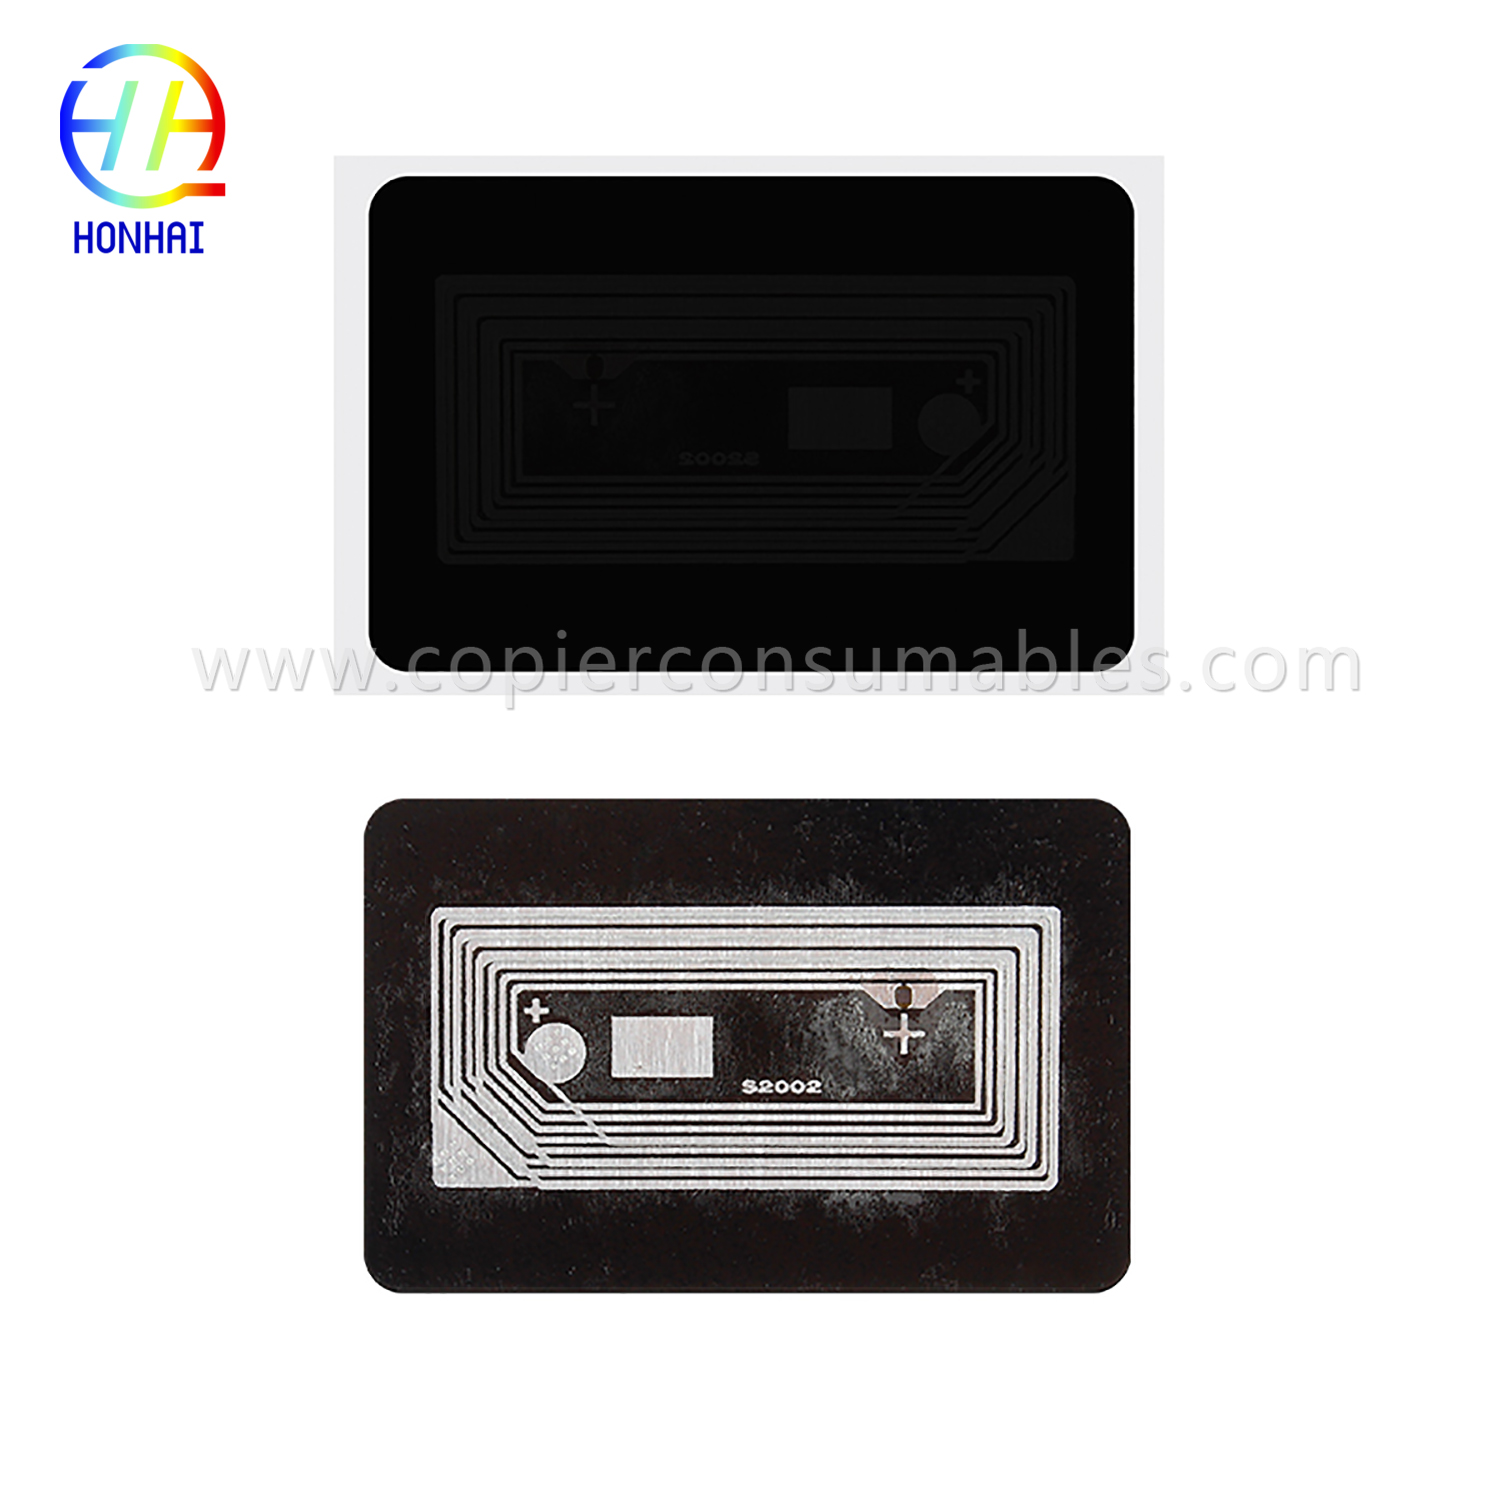 Toner Cartridge Chip for Kyocera Fs-1030mfp 1030mfp Dp 1130mfp (TK-1130 1131 1132 1133 1134) 拷贝